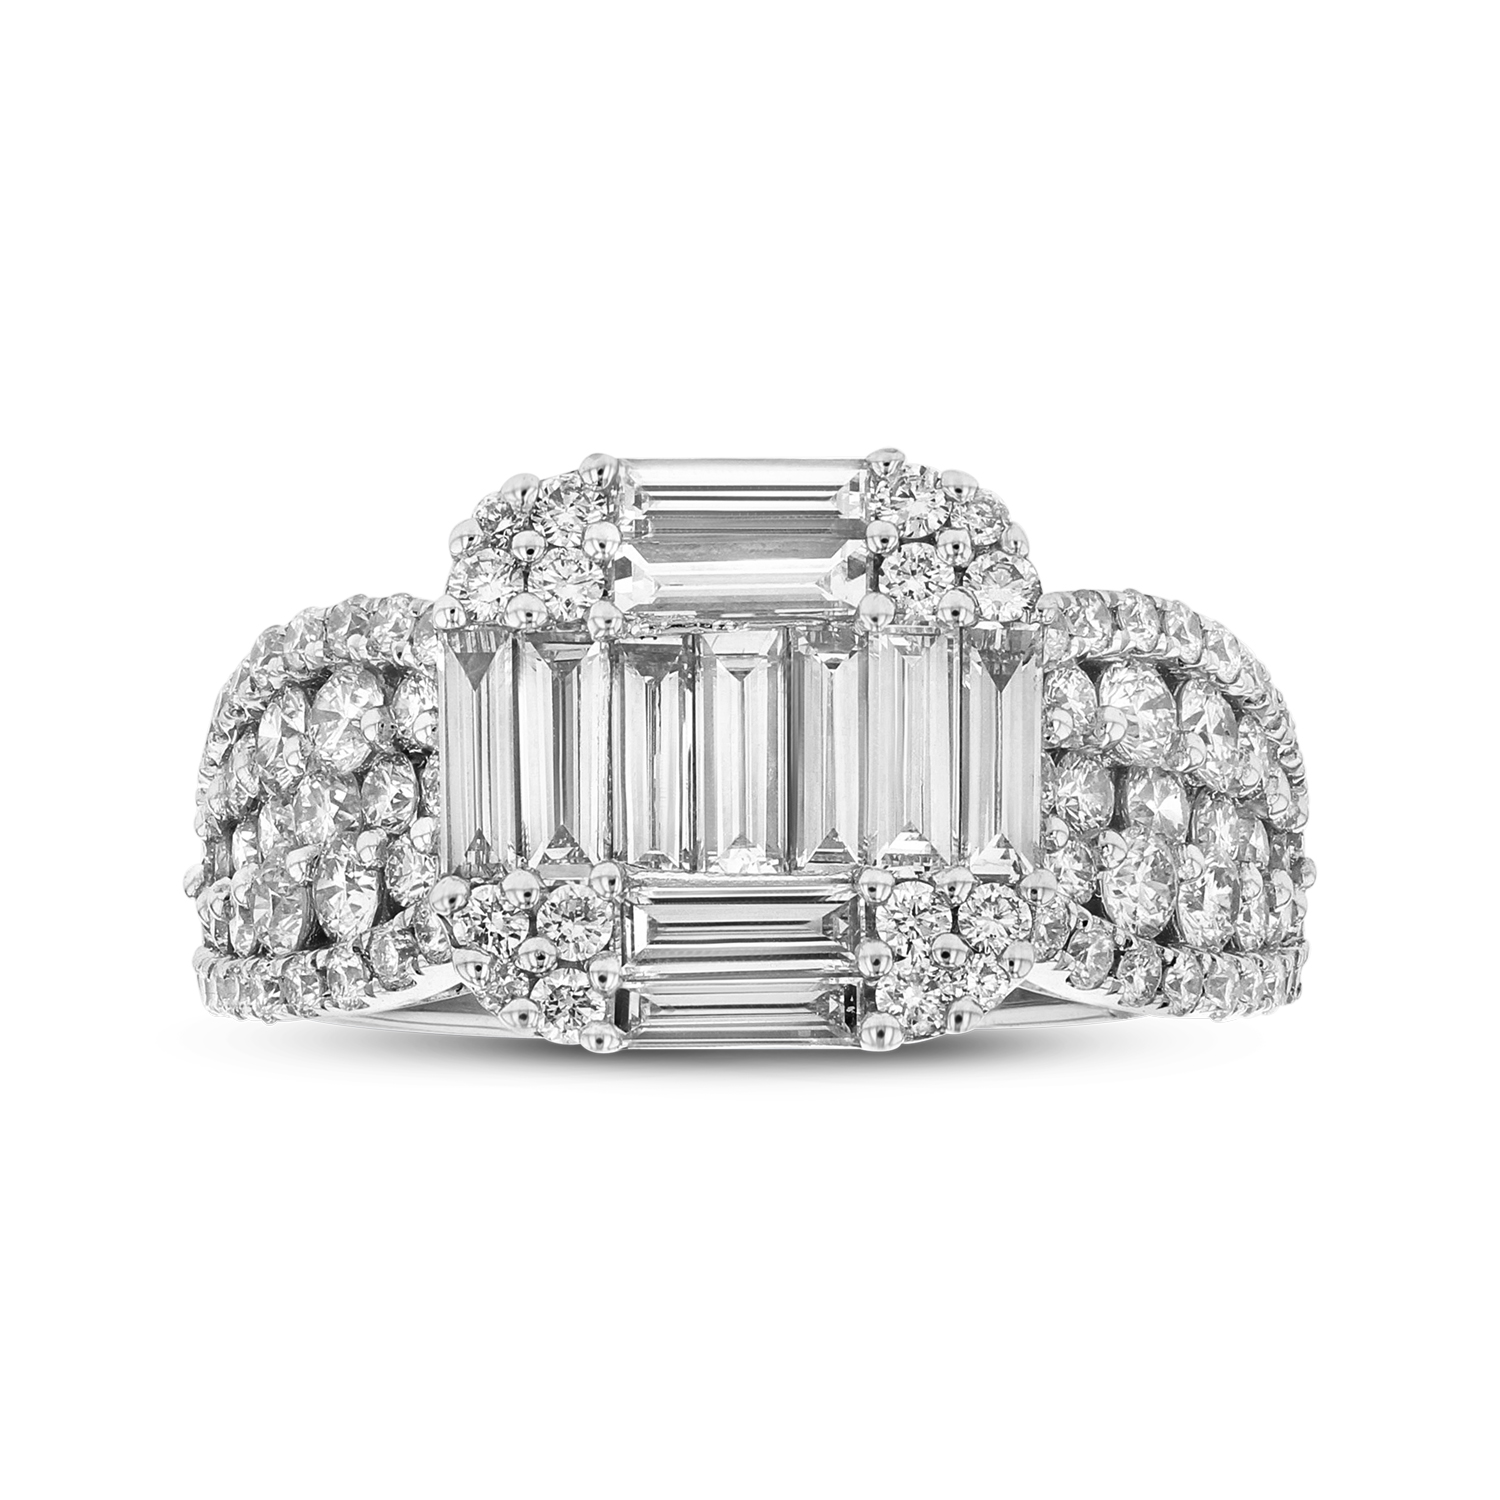 View 1.88ctw Diamond Fashion Ring in 18k White Gold